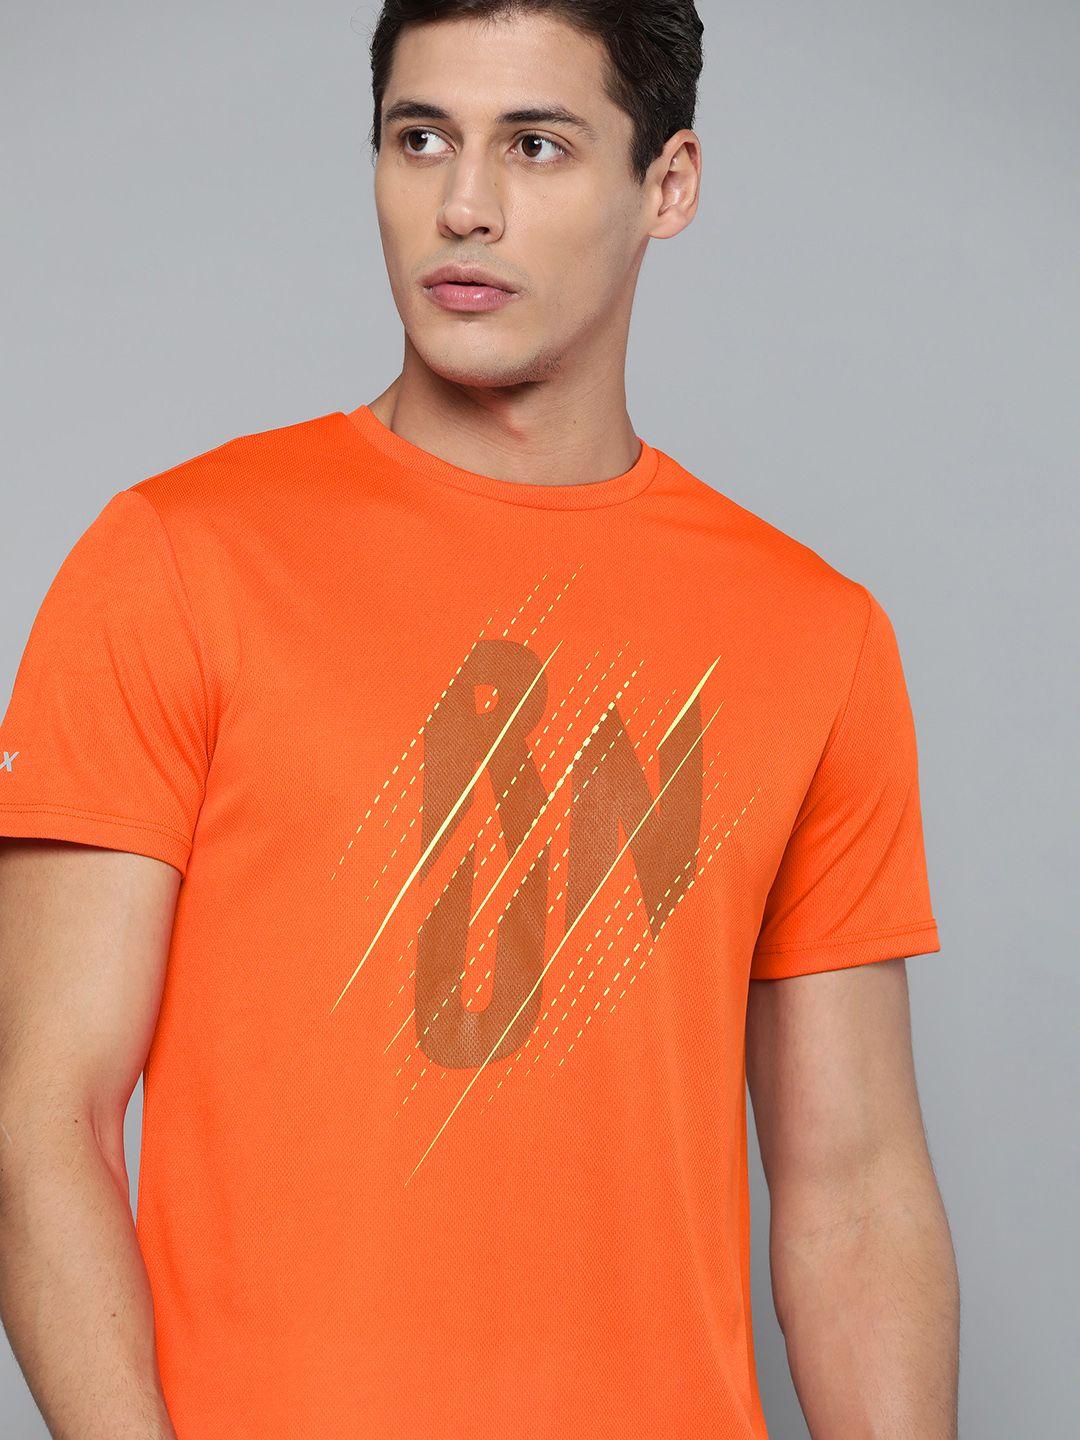 hrx by hrithik roshan running men neon orange rapid-dry typography t-shirt